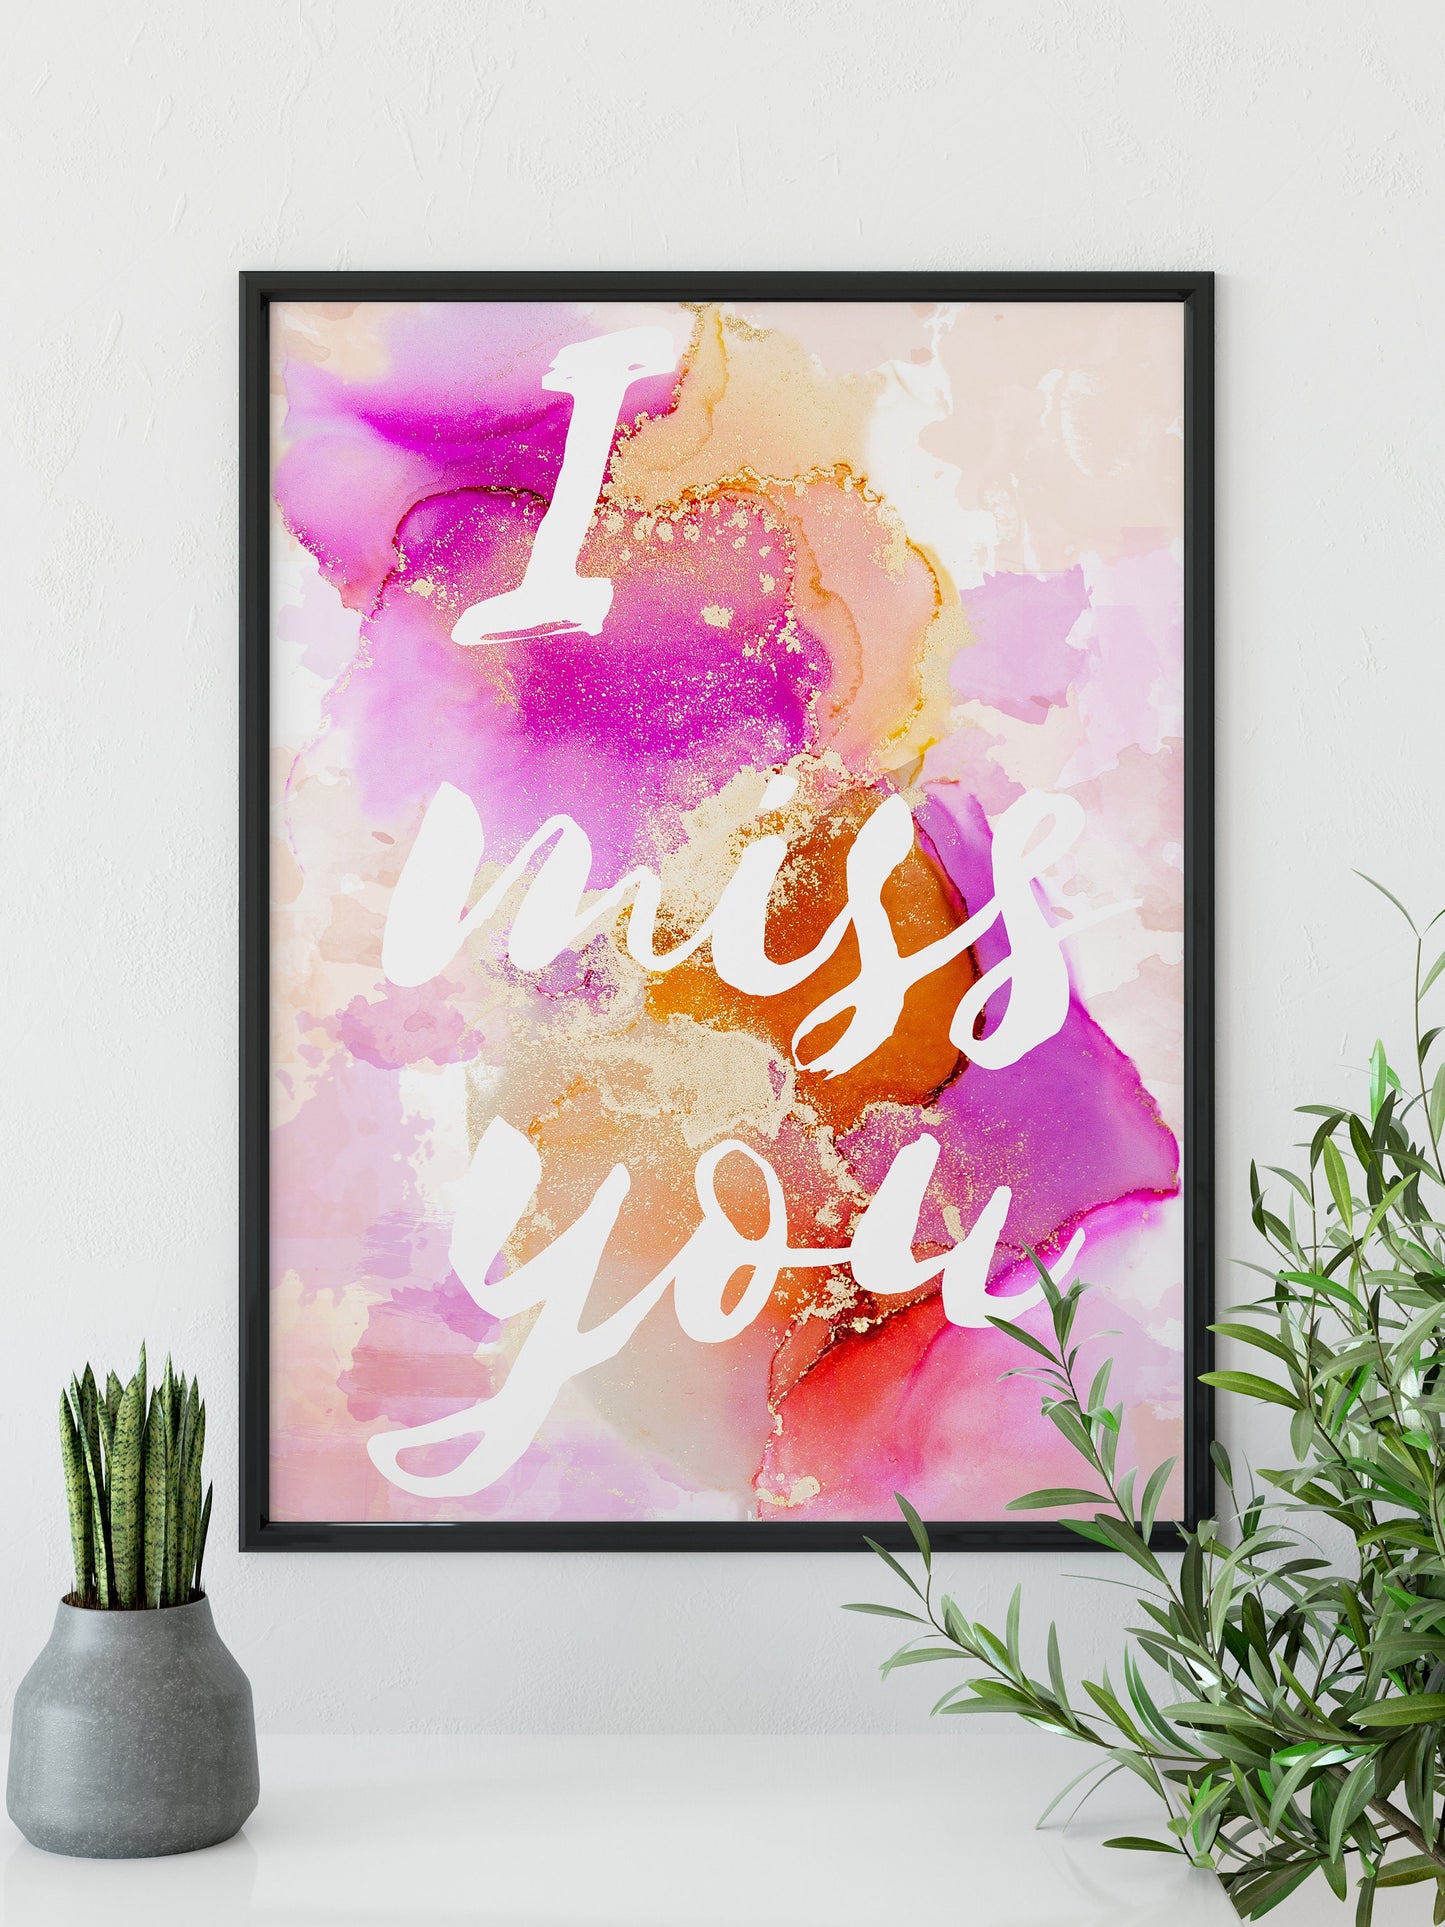 'I Love You' Print